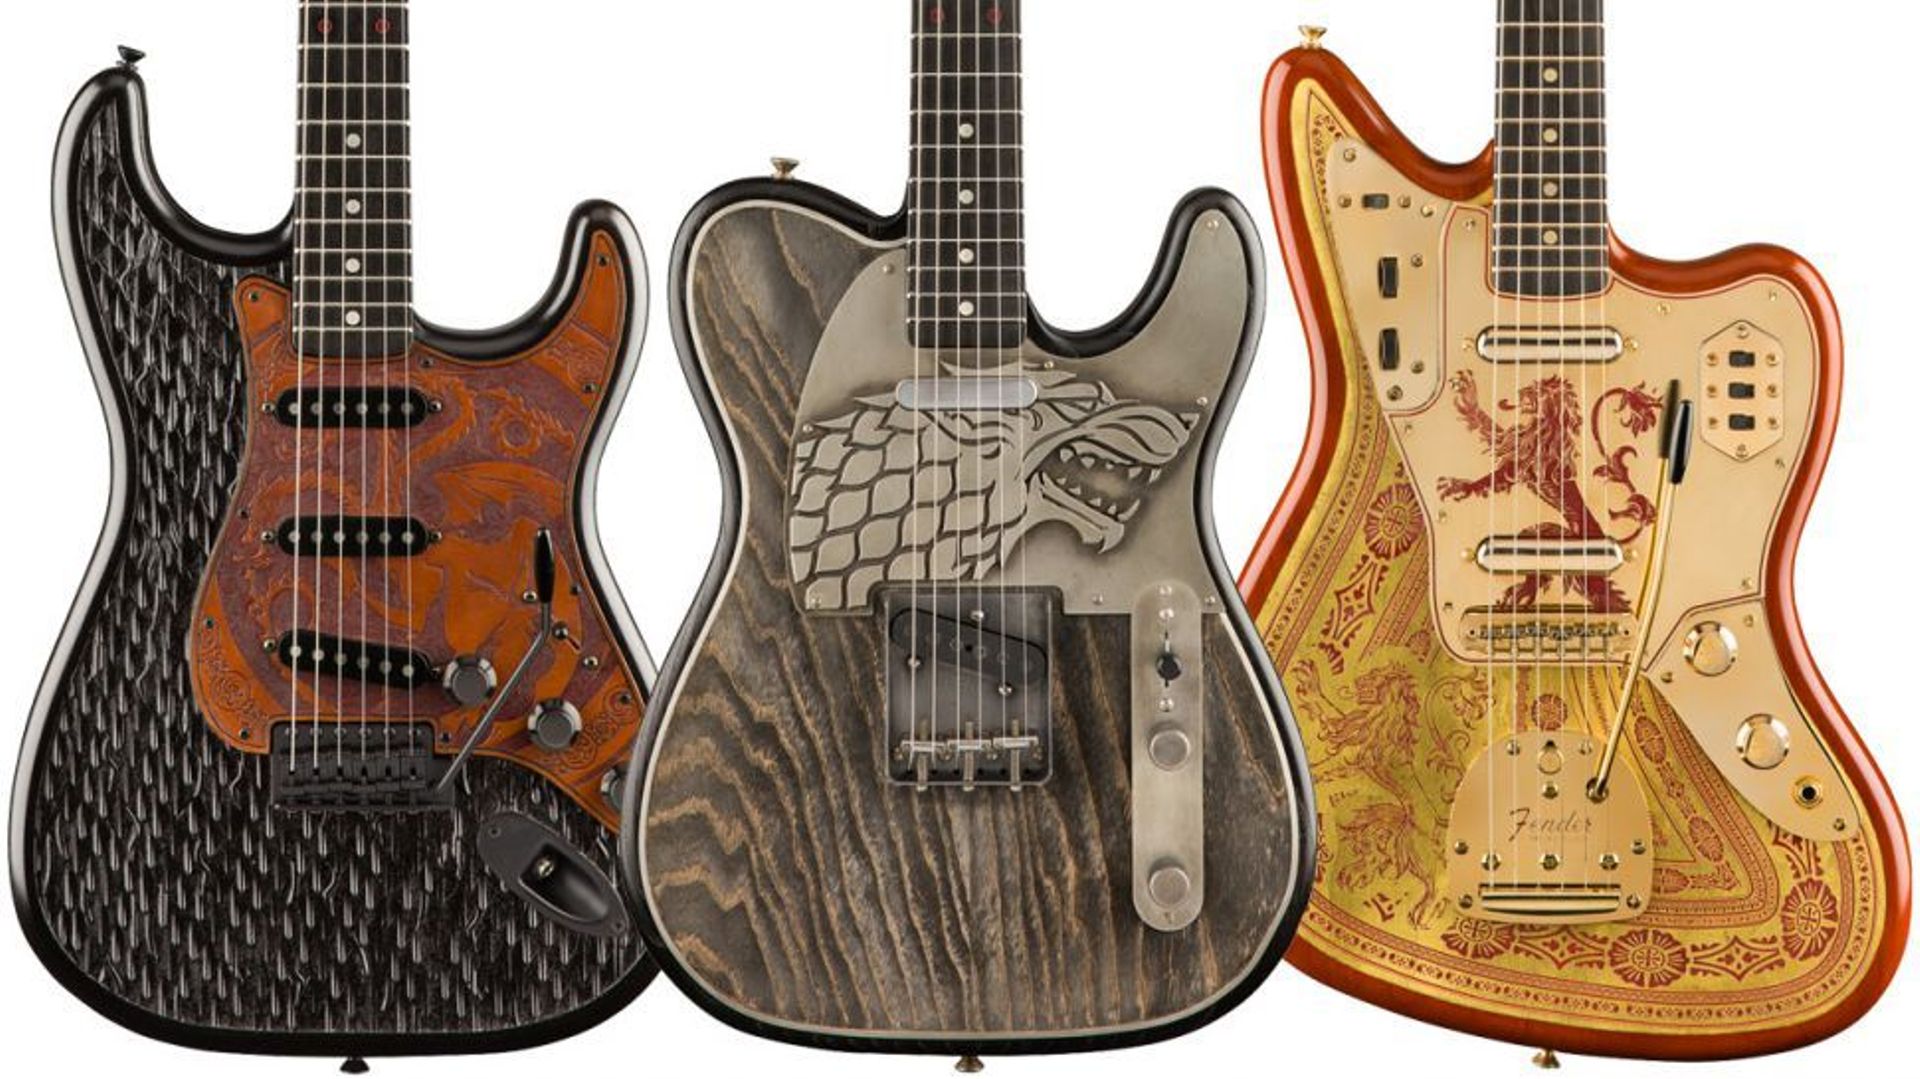 Fender : 3 guitares Game of Thrones